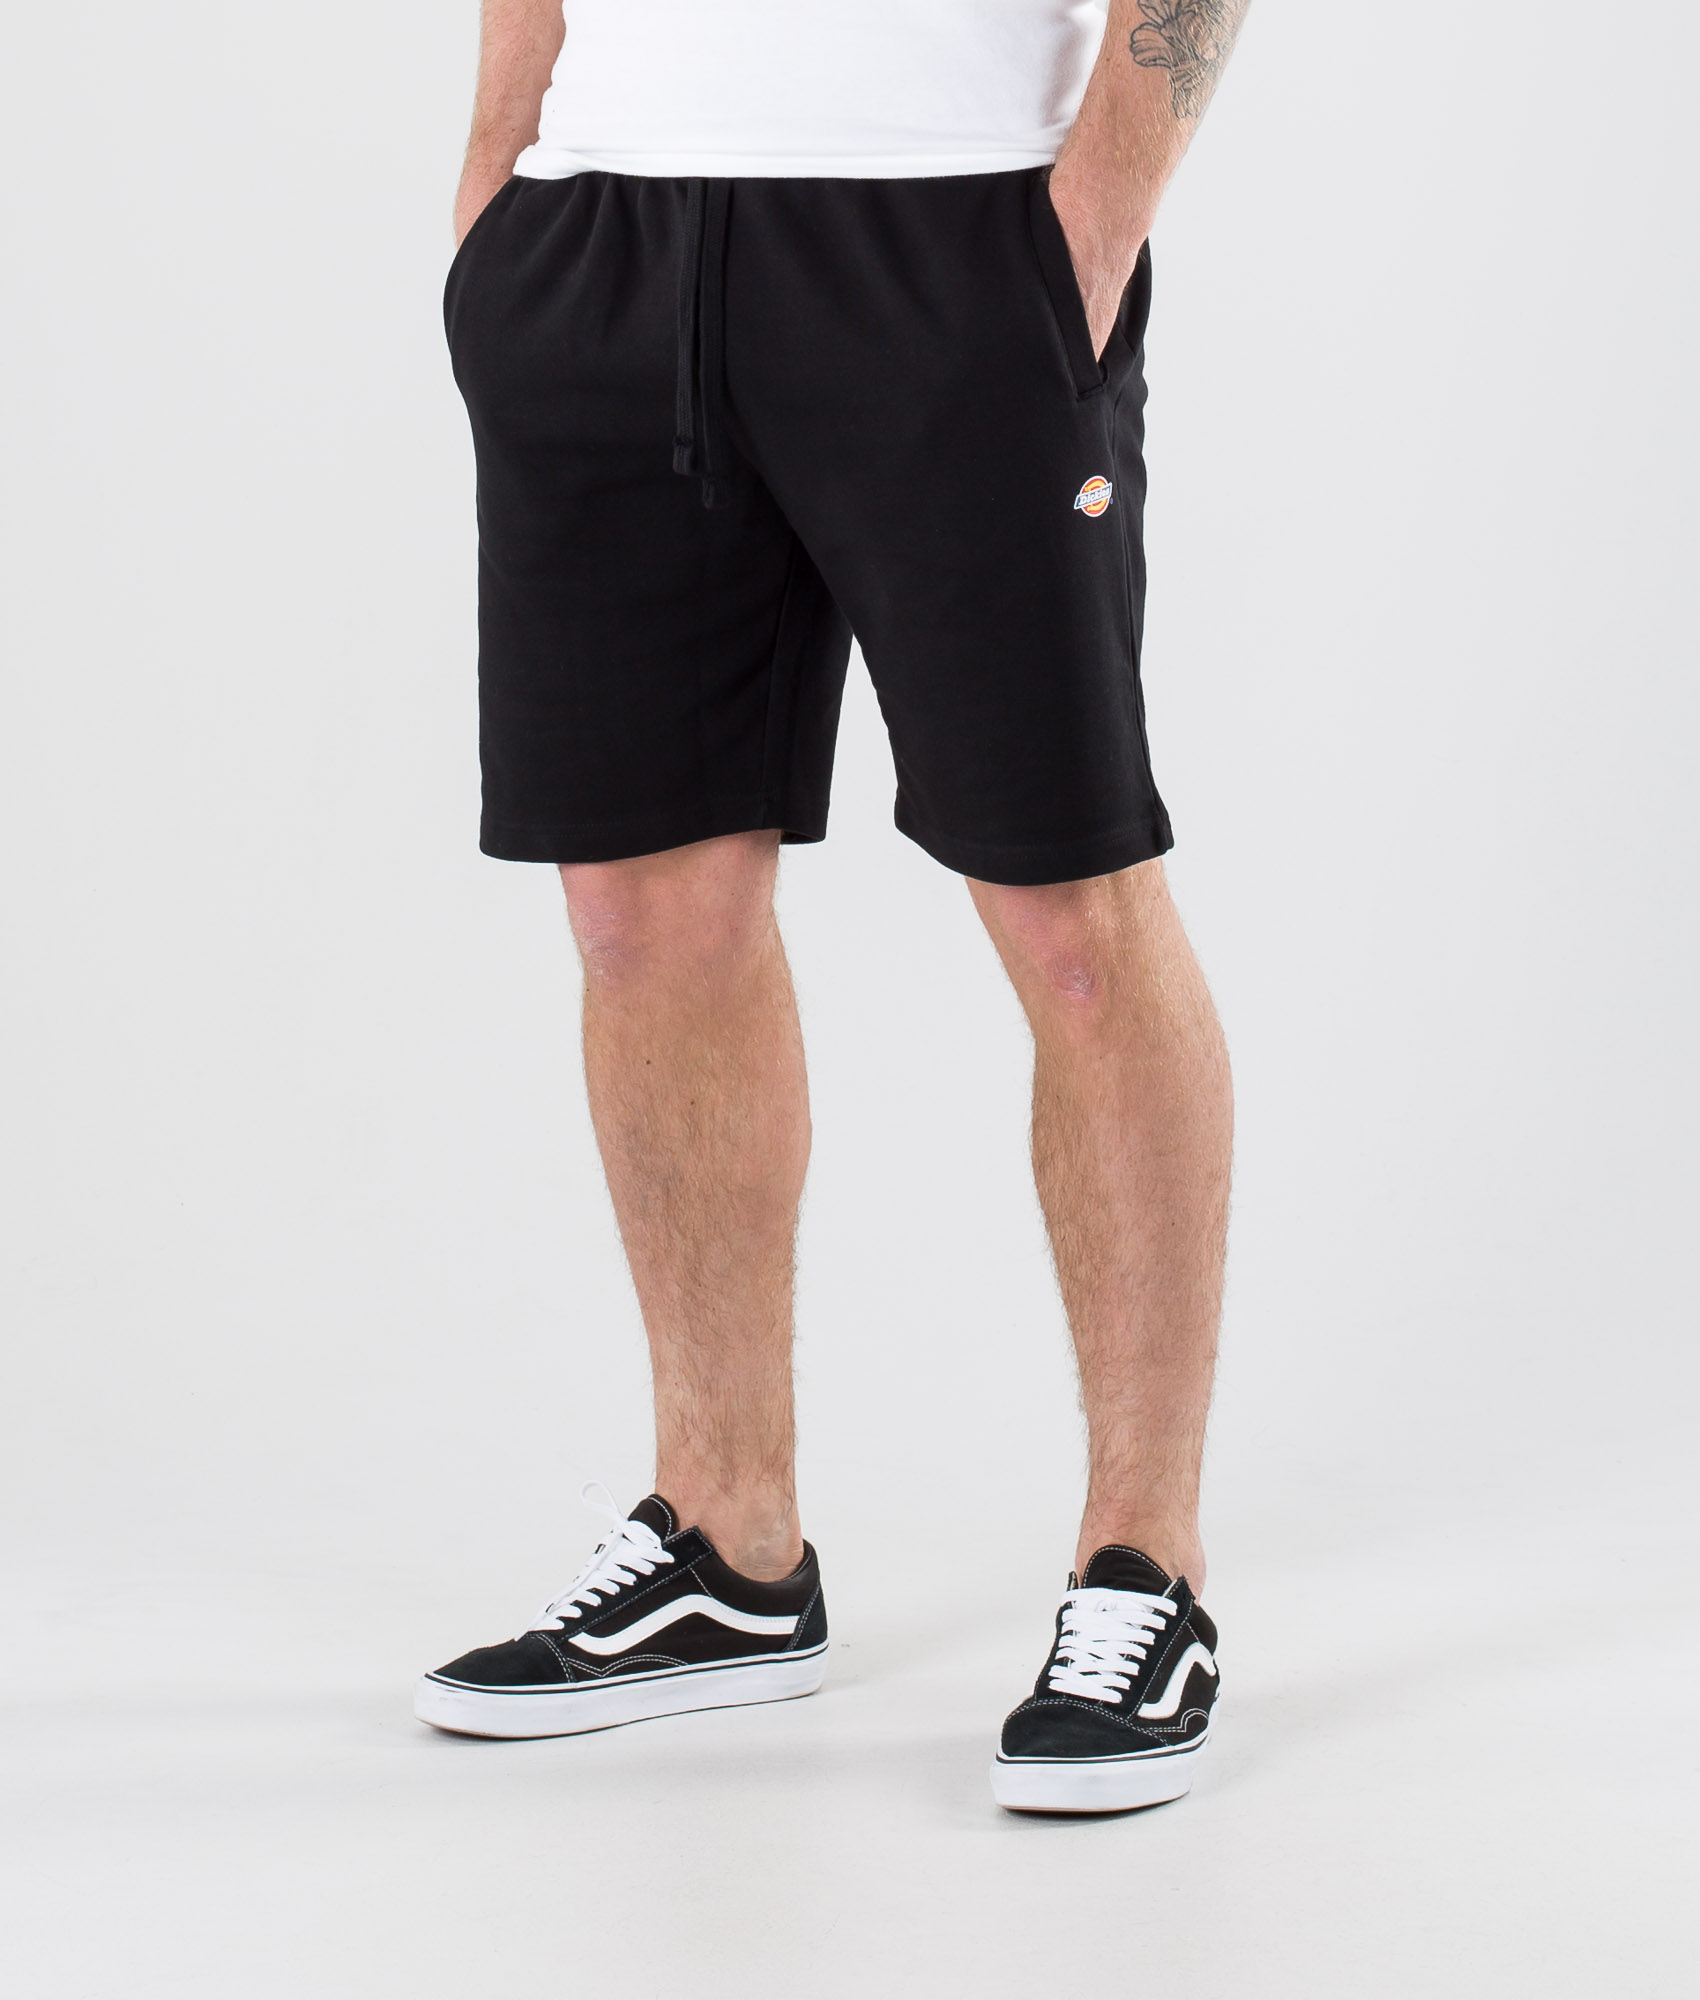 black jersey shorts